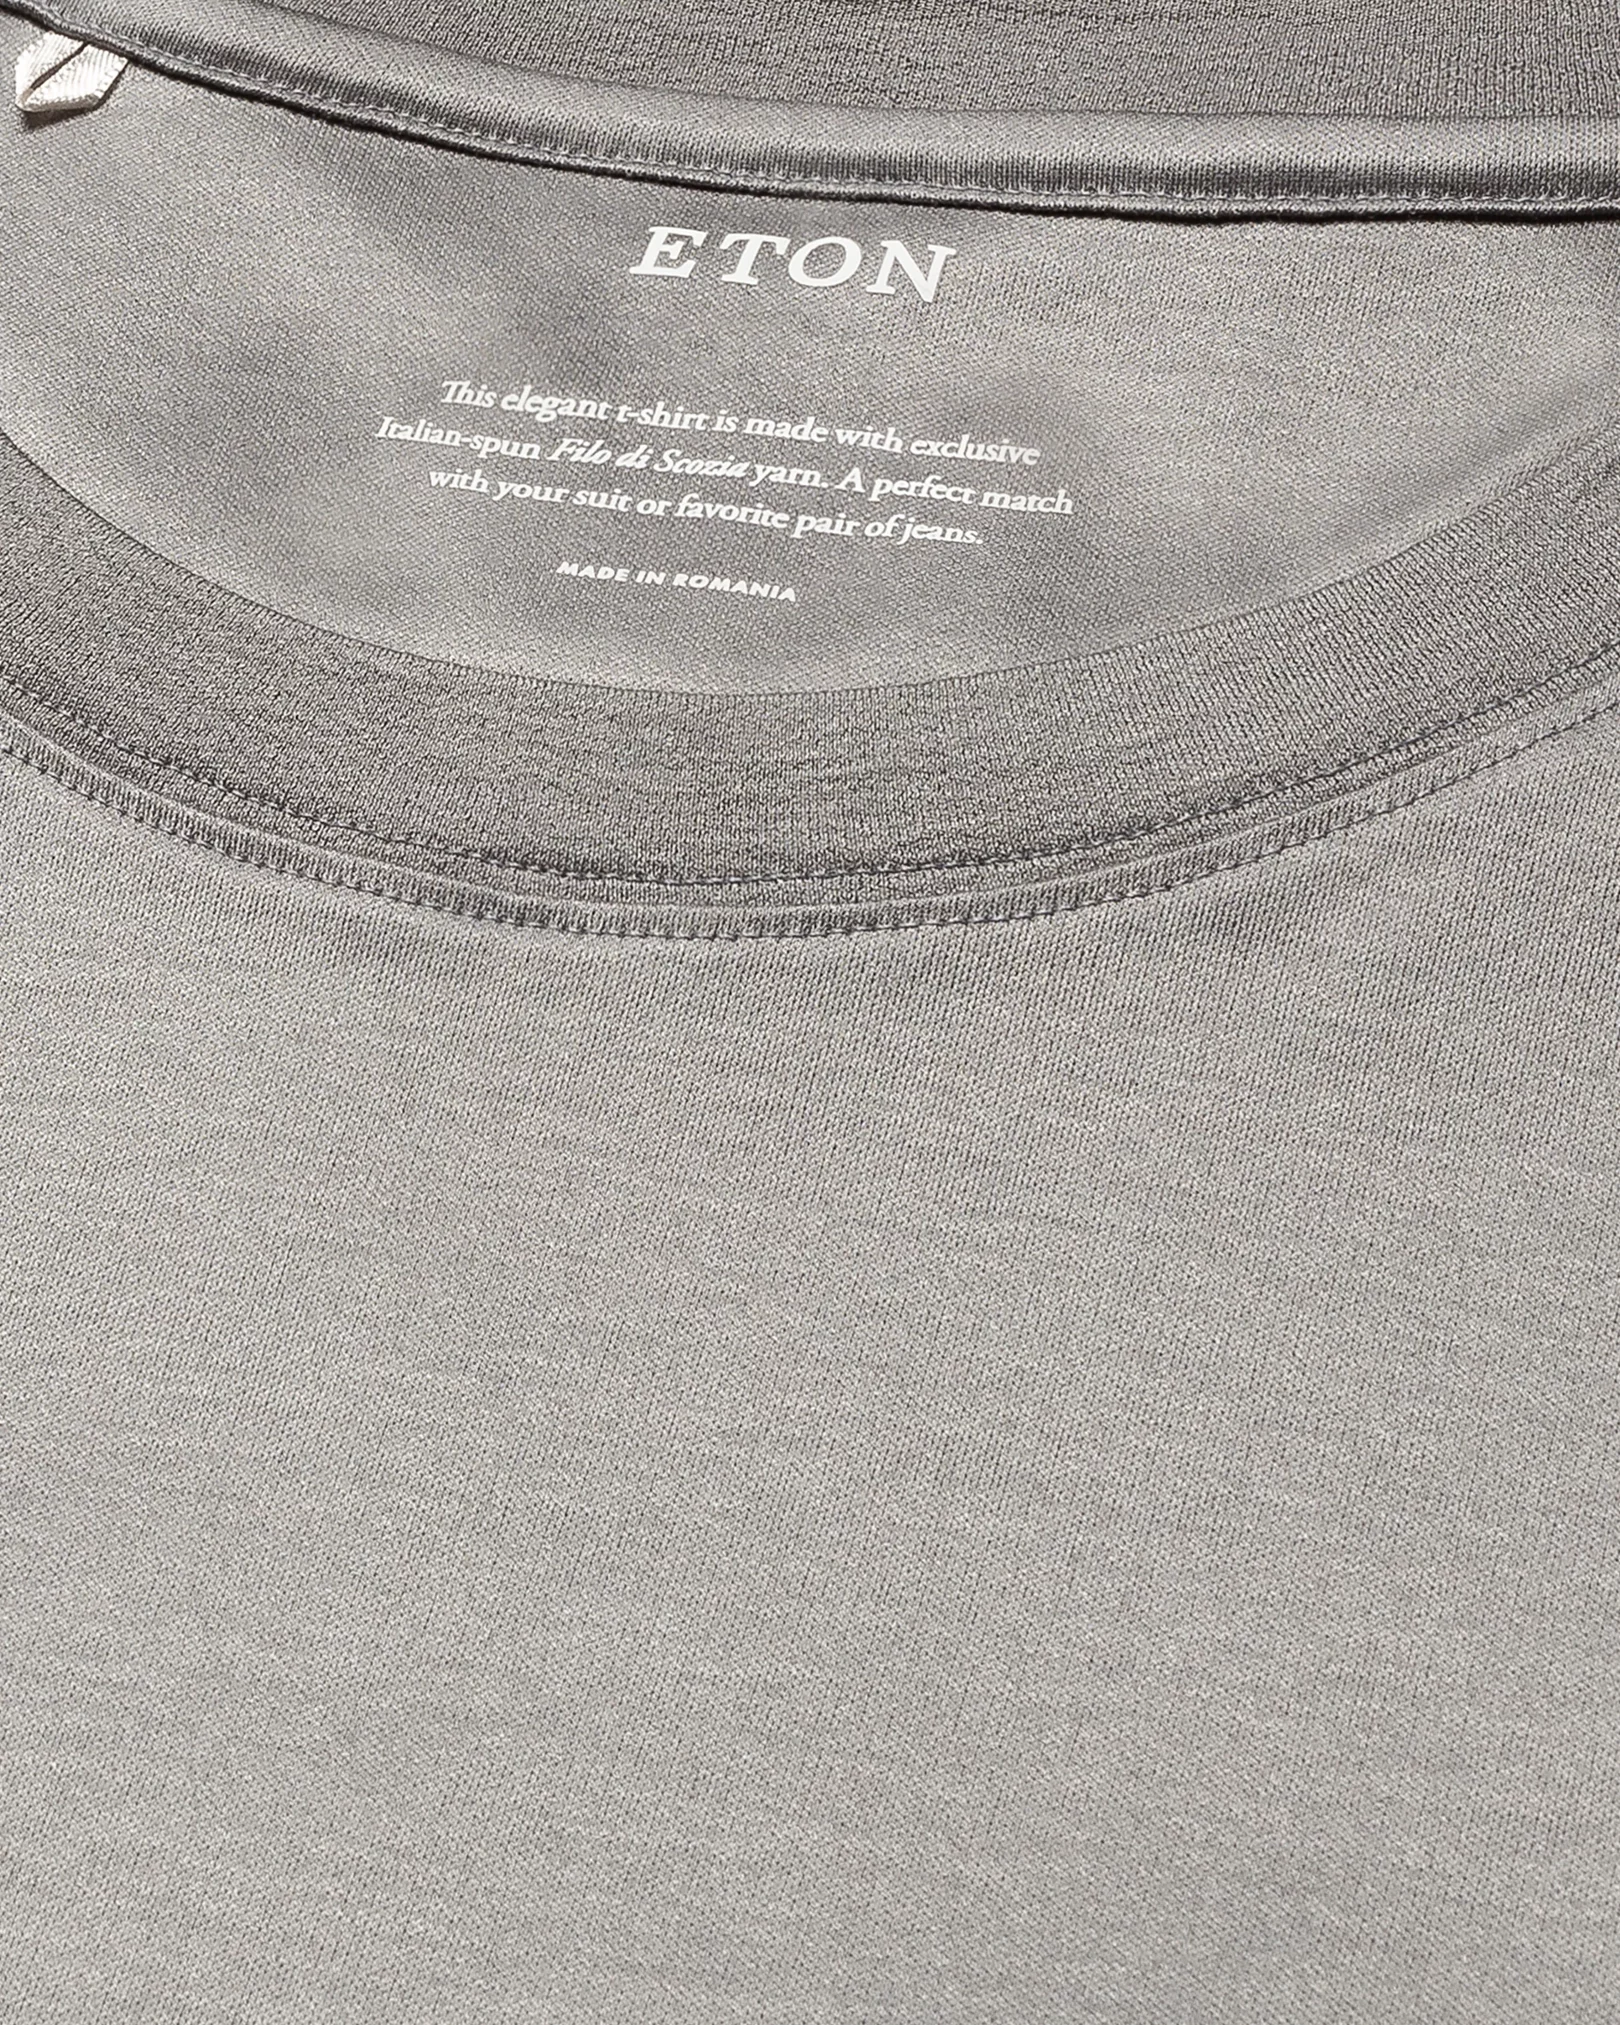 Eton - light grey jersey t shirt long sleeve